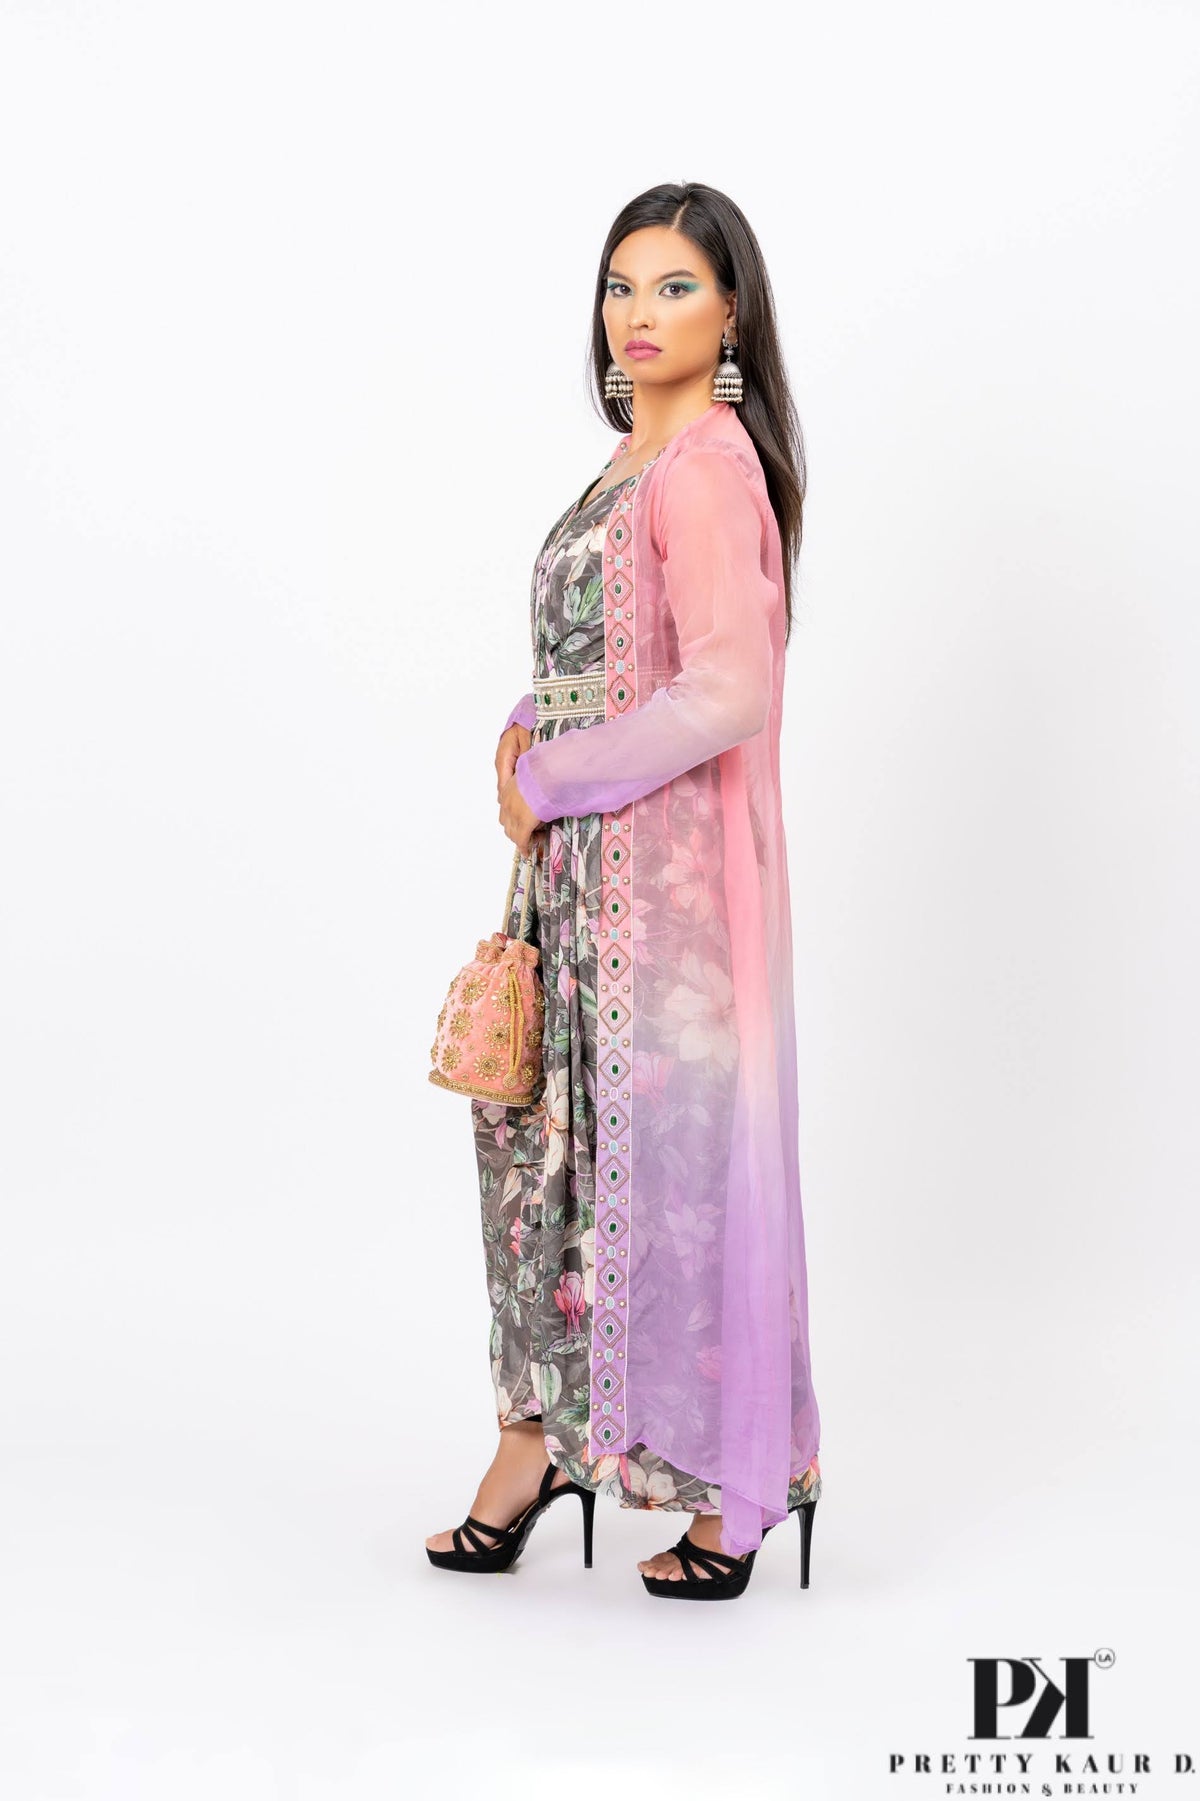 Pretty-Kaur-fashion-beauty-Dress-with-Full-Length-Pink-Jacket-2